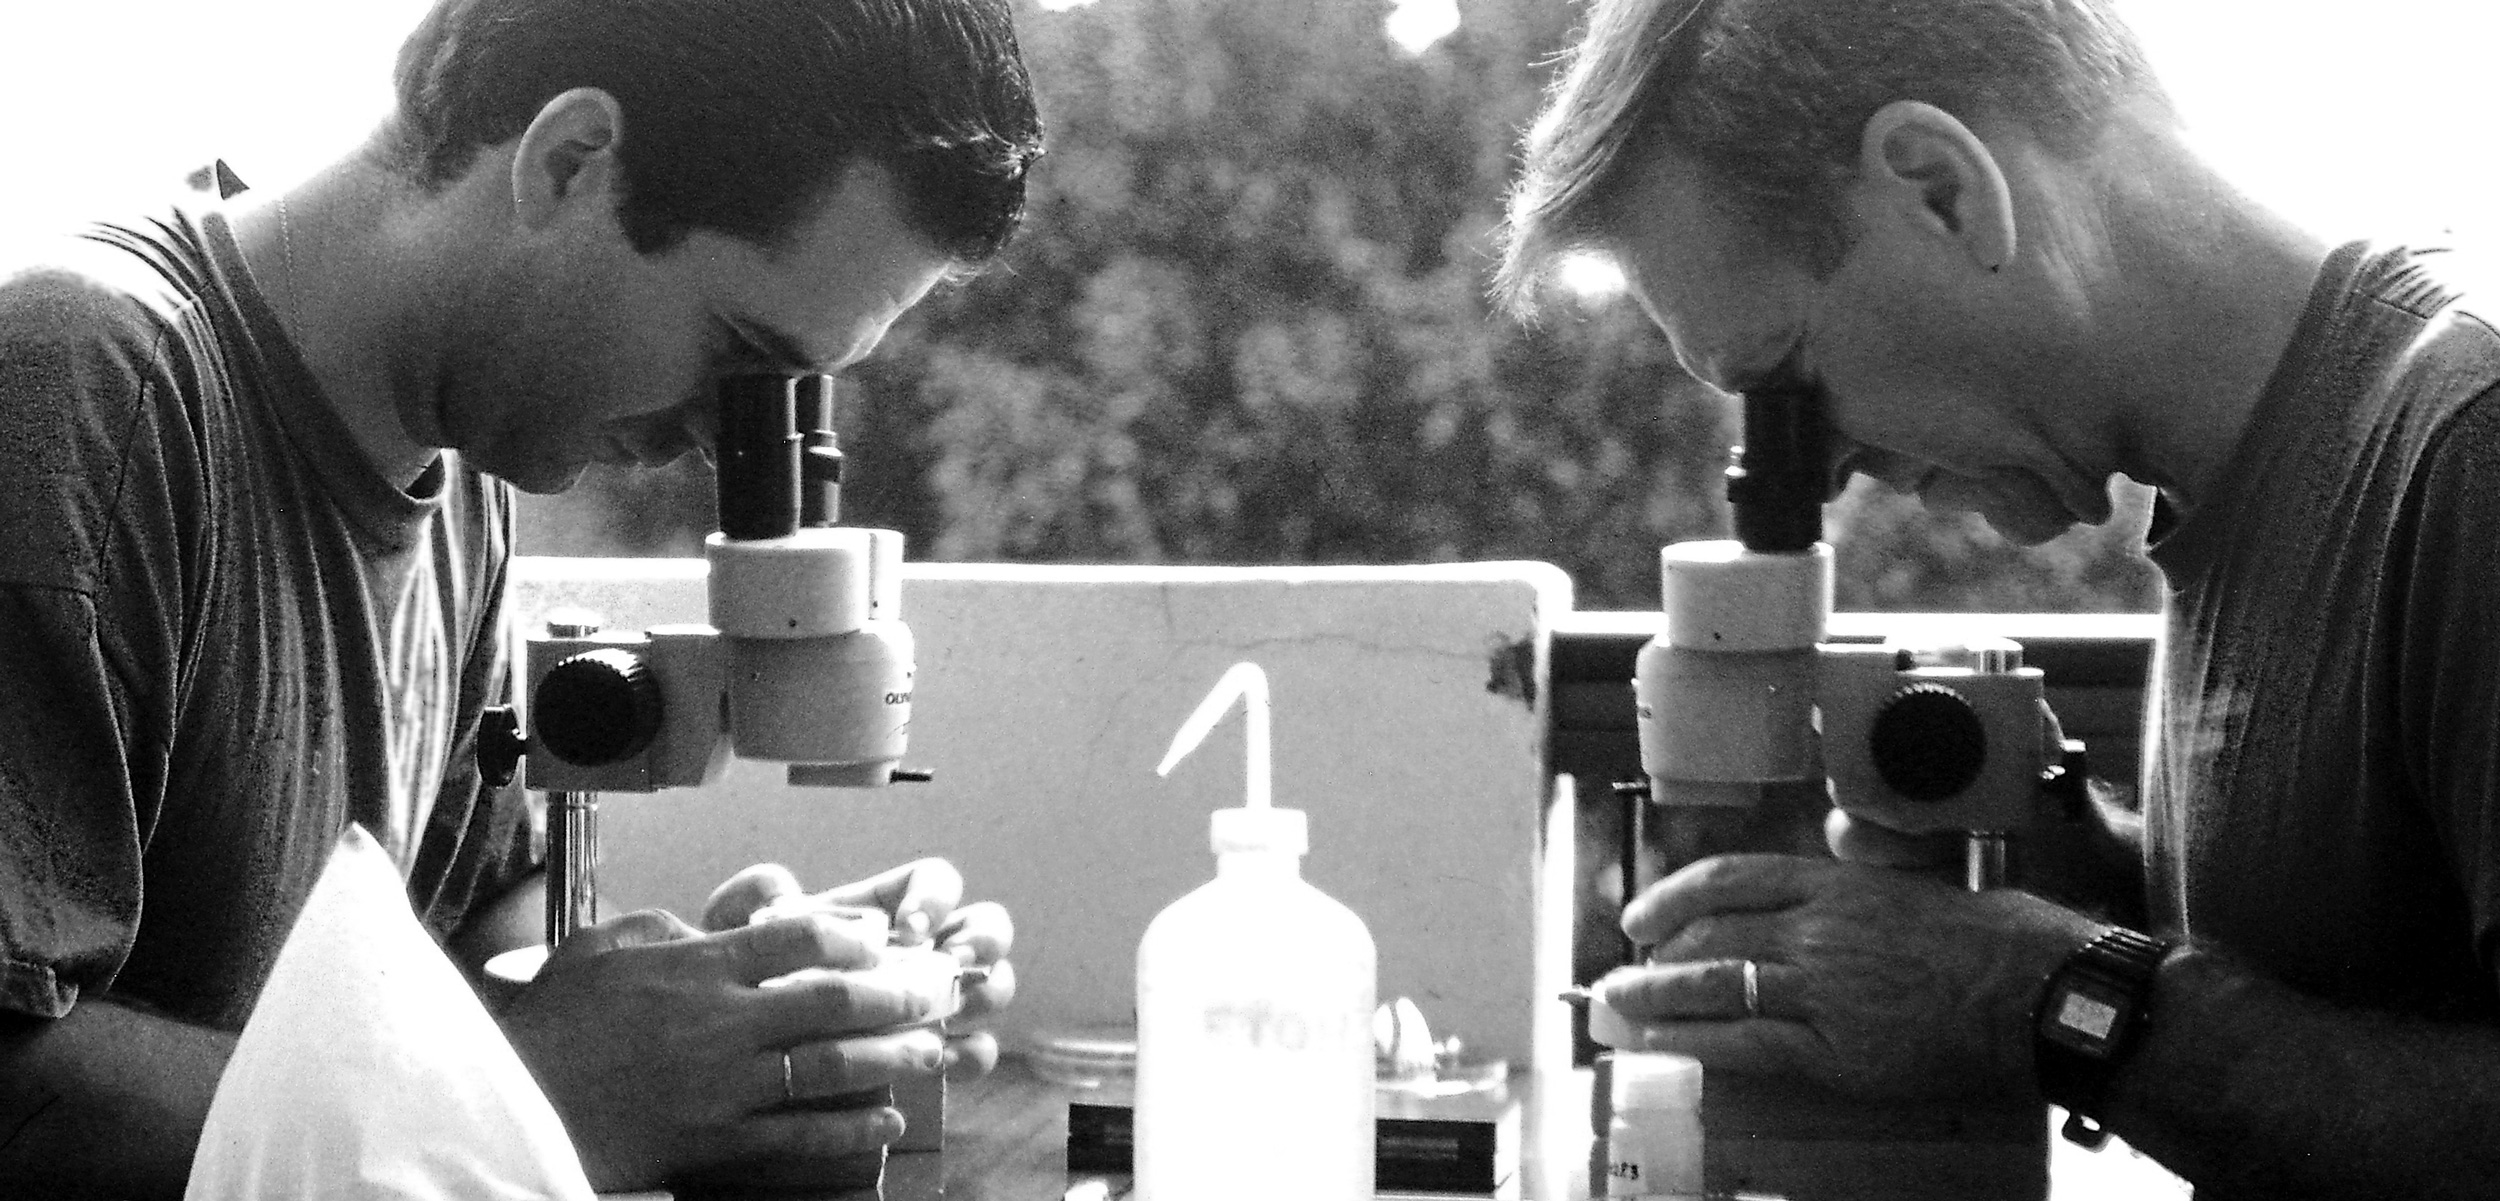 Robert Higgins and Fernando Pardos at microscopes in Spain